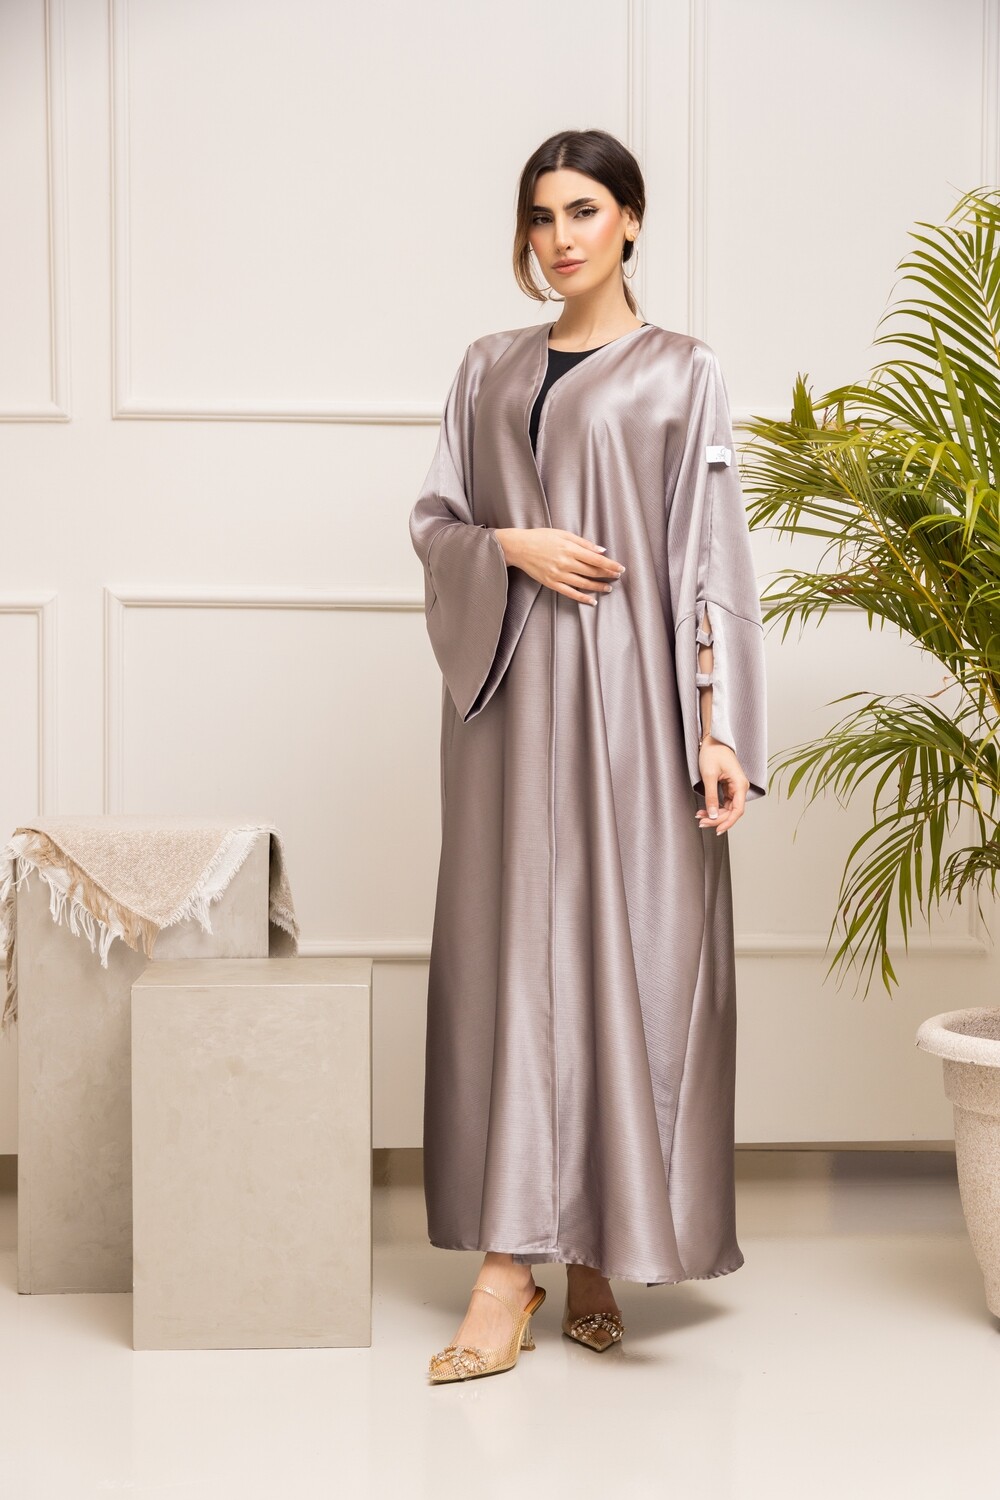 Silky Gray Abaya With Scarf